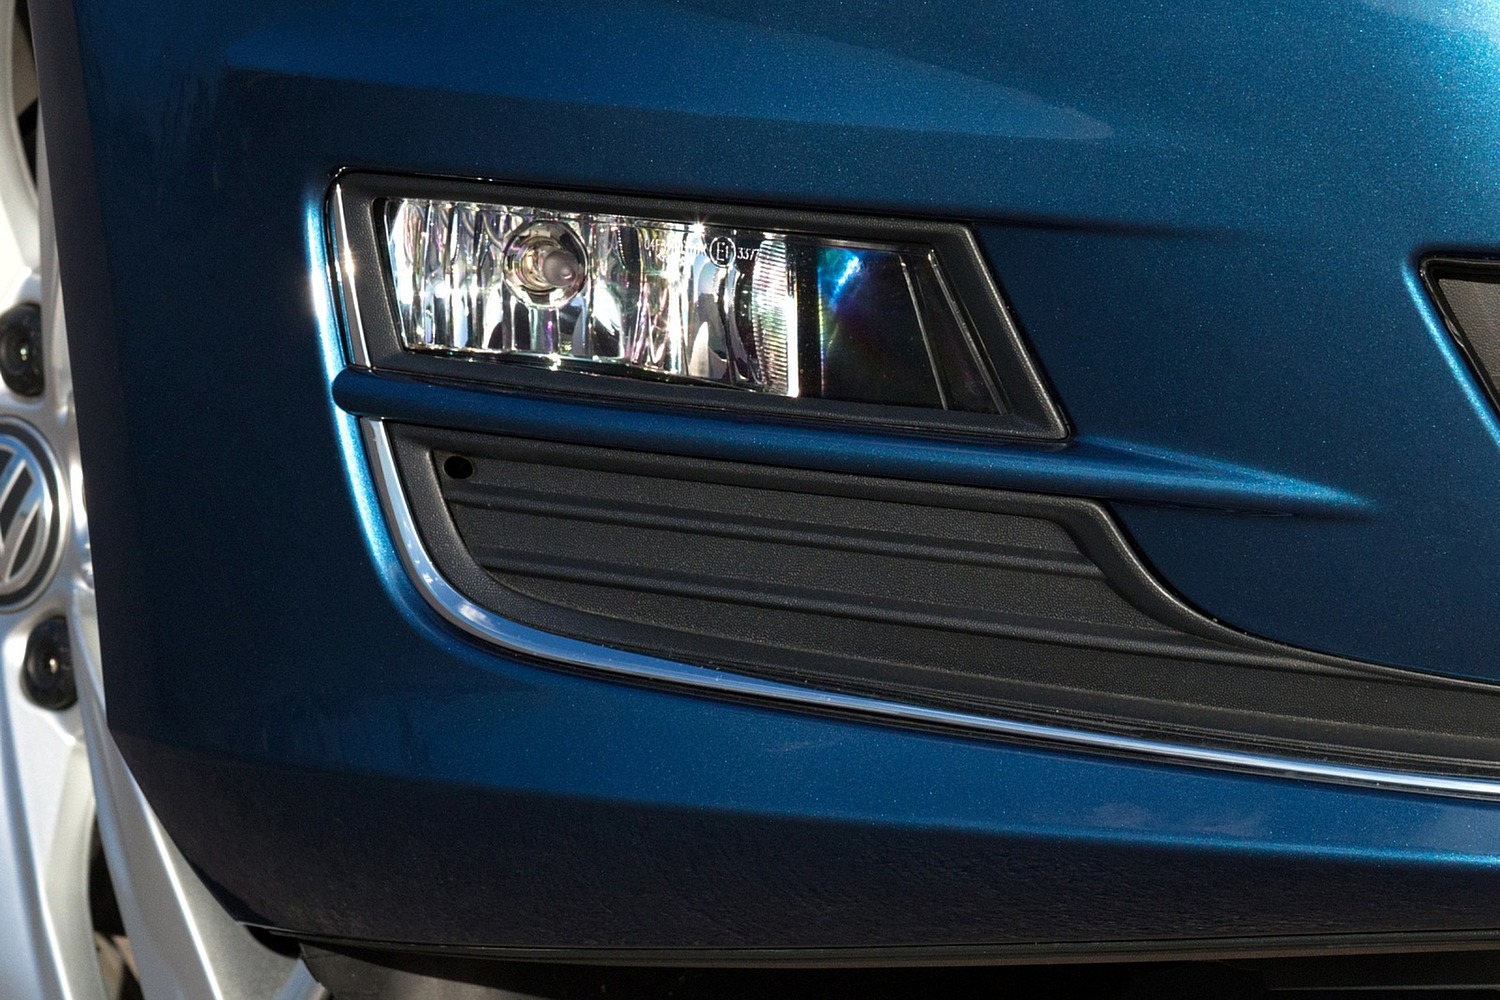 Volkswagen Golf SportWagen TSI SEL Wagon Fog Light (2015 model year shown)